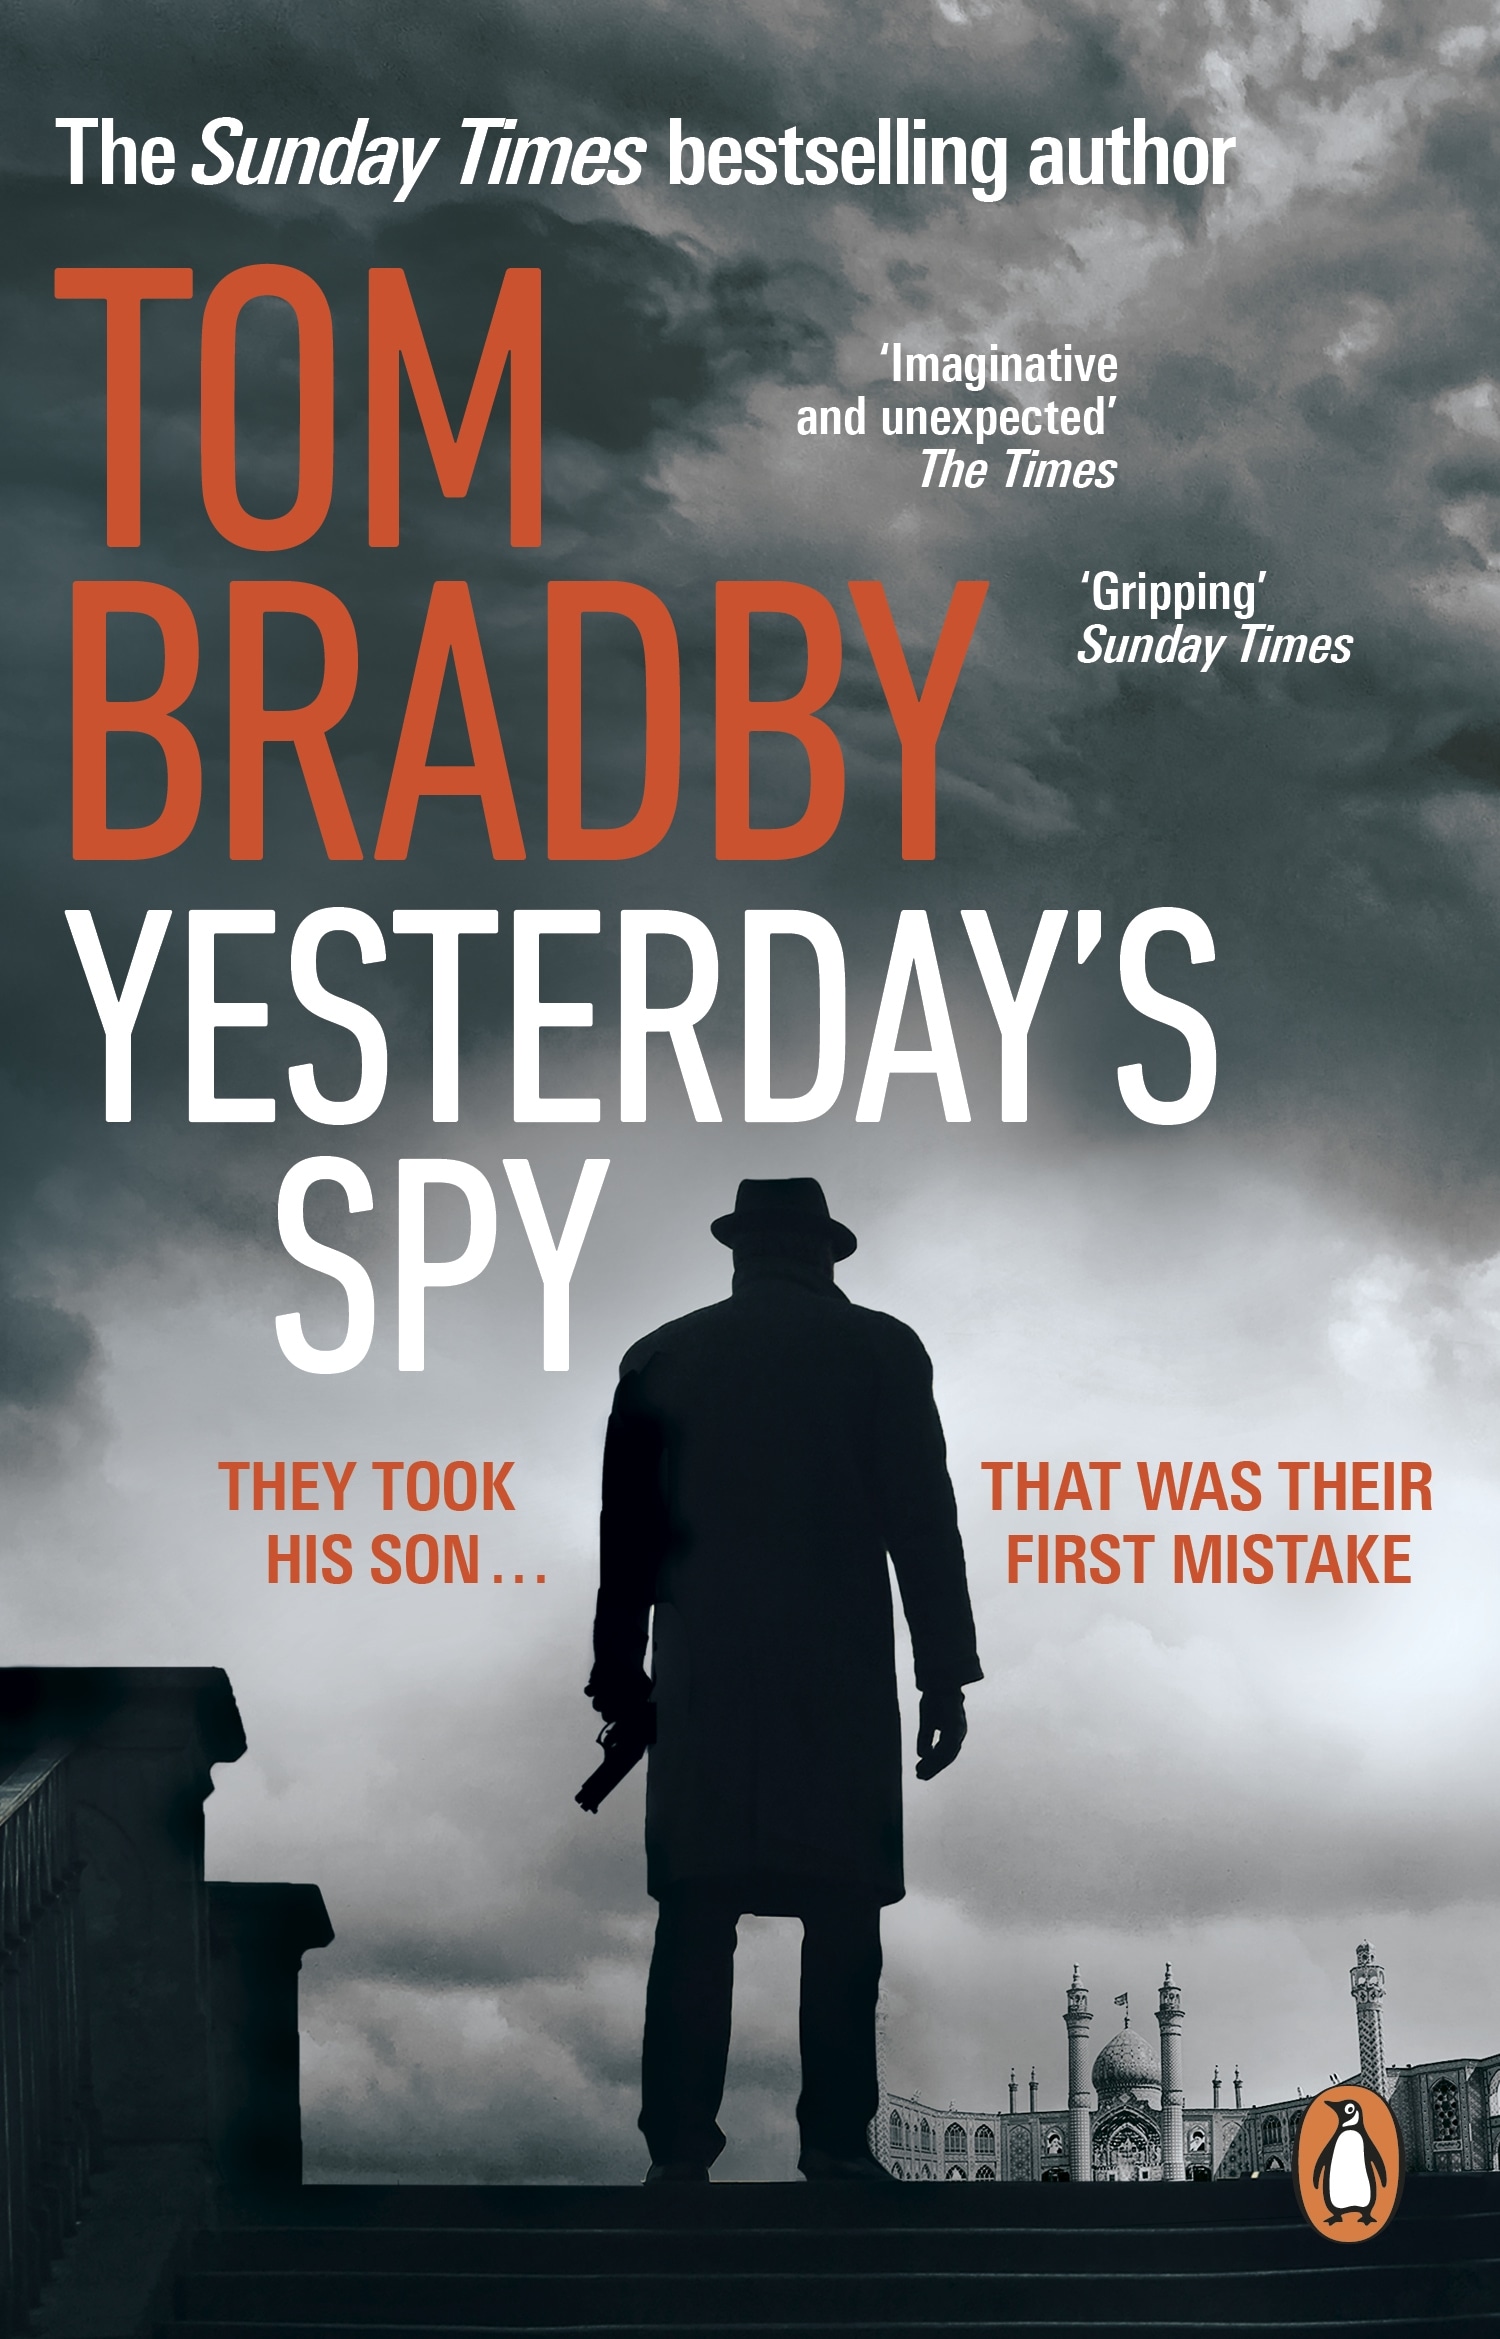 Book “Yesterday's Spy” by Tom Bradby — December 8, 2022